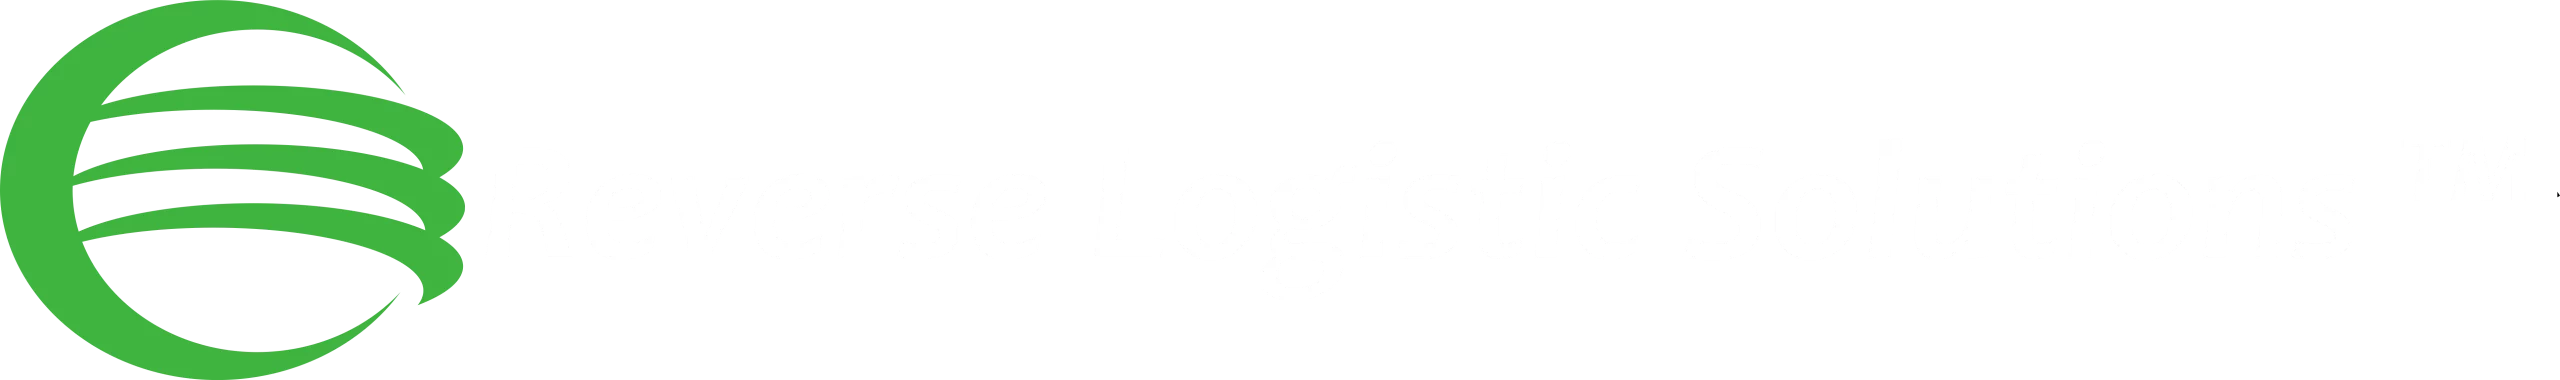 Reverse Logistics Solutions